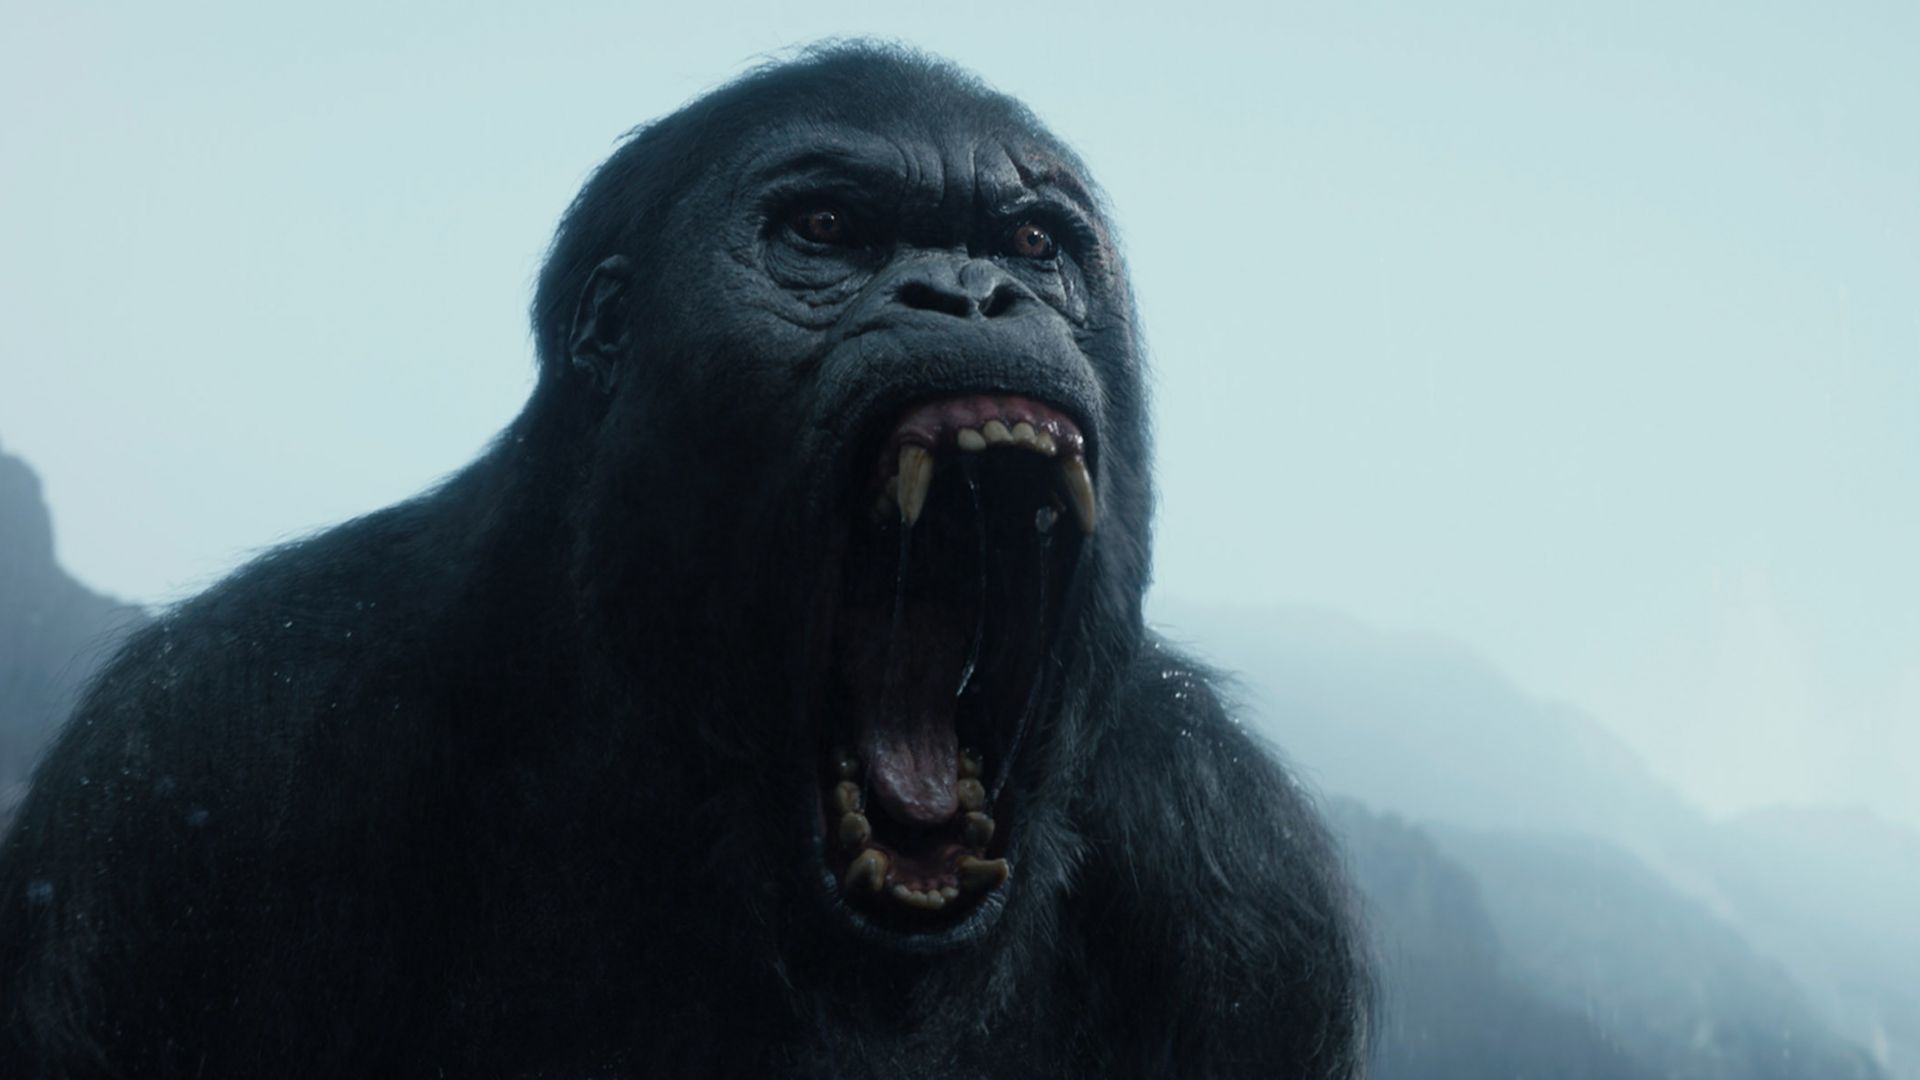 Тарзан. Легенда, горилла, Лучшие фильмы 2016, The Legend of Tarzan, gorilla, best movies 2016 (horizontal)